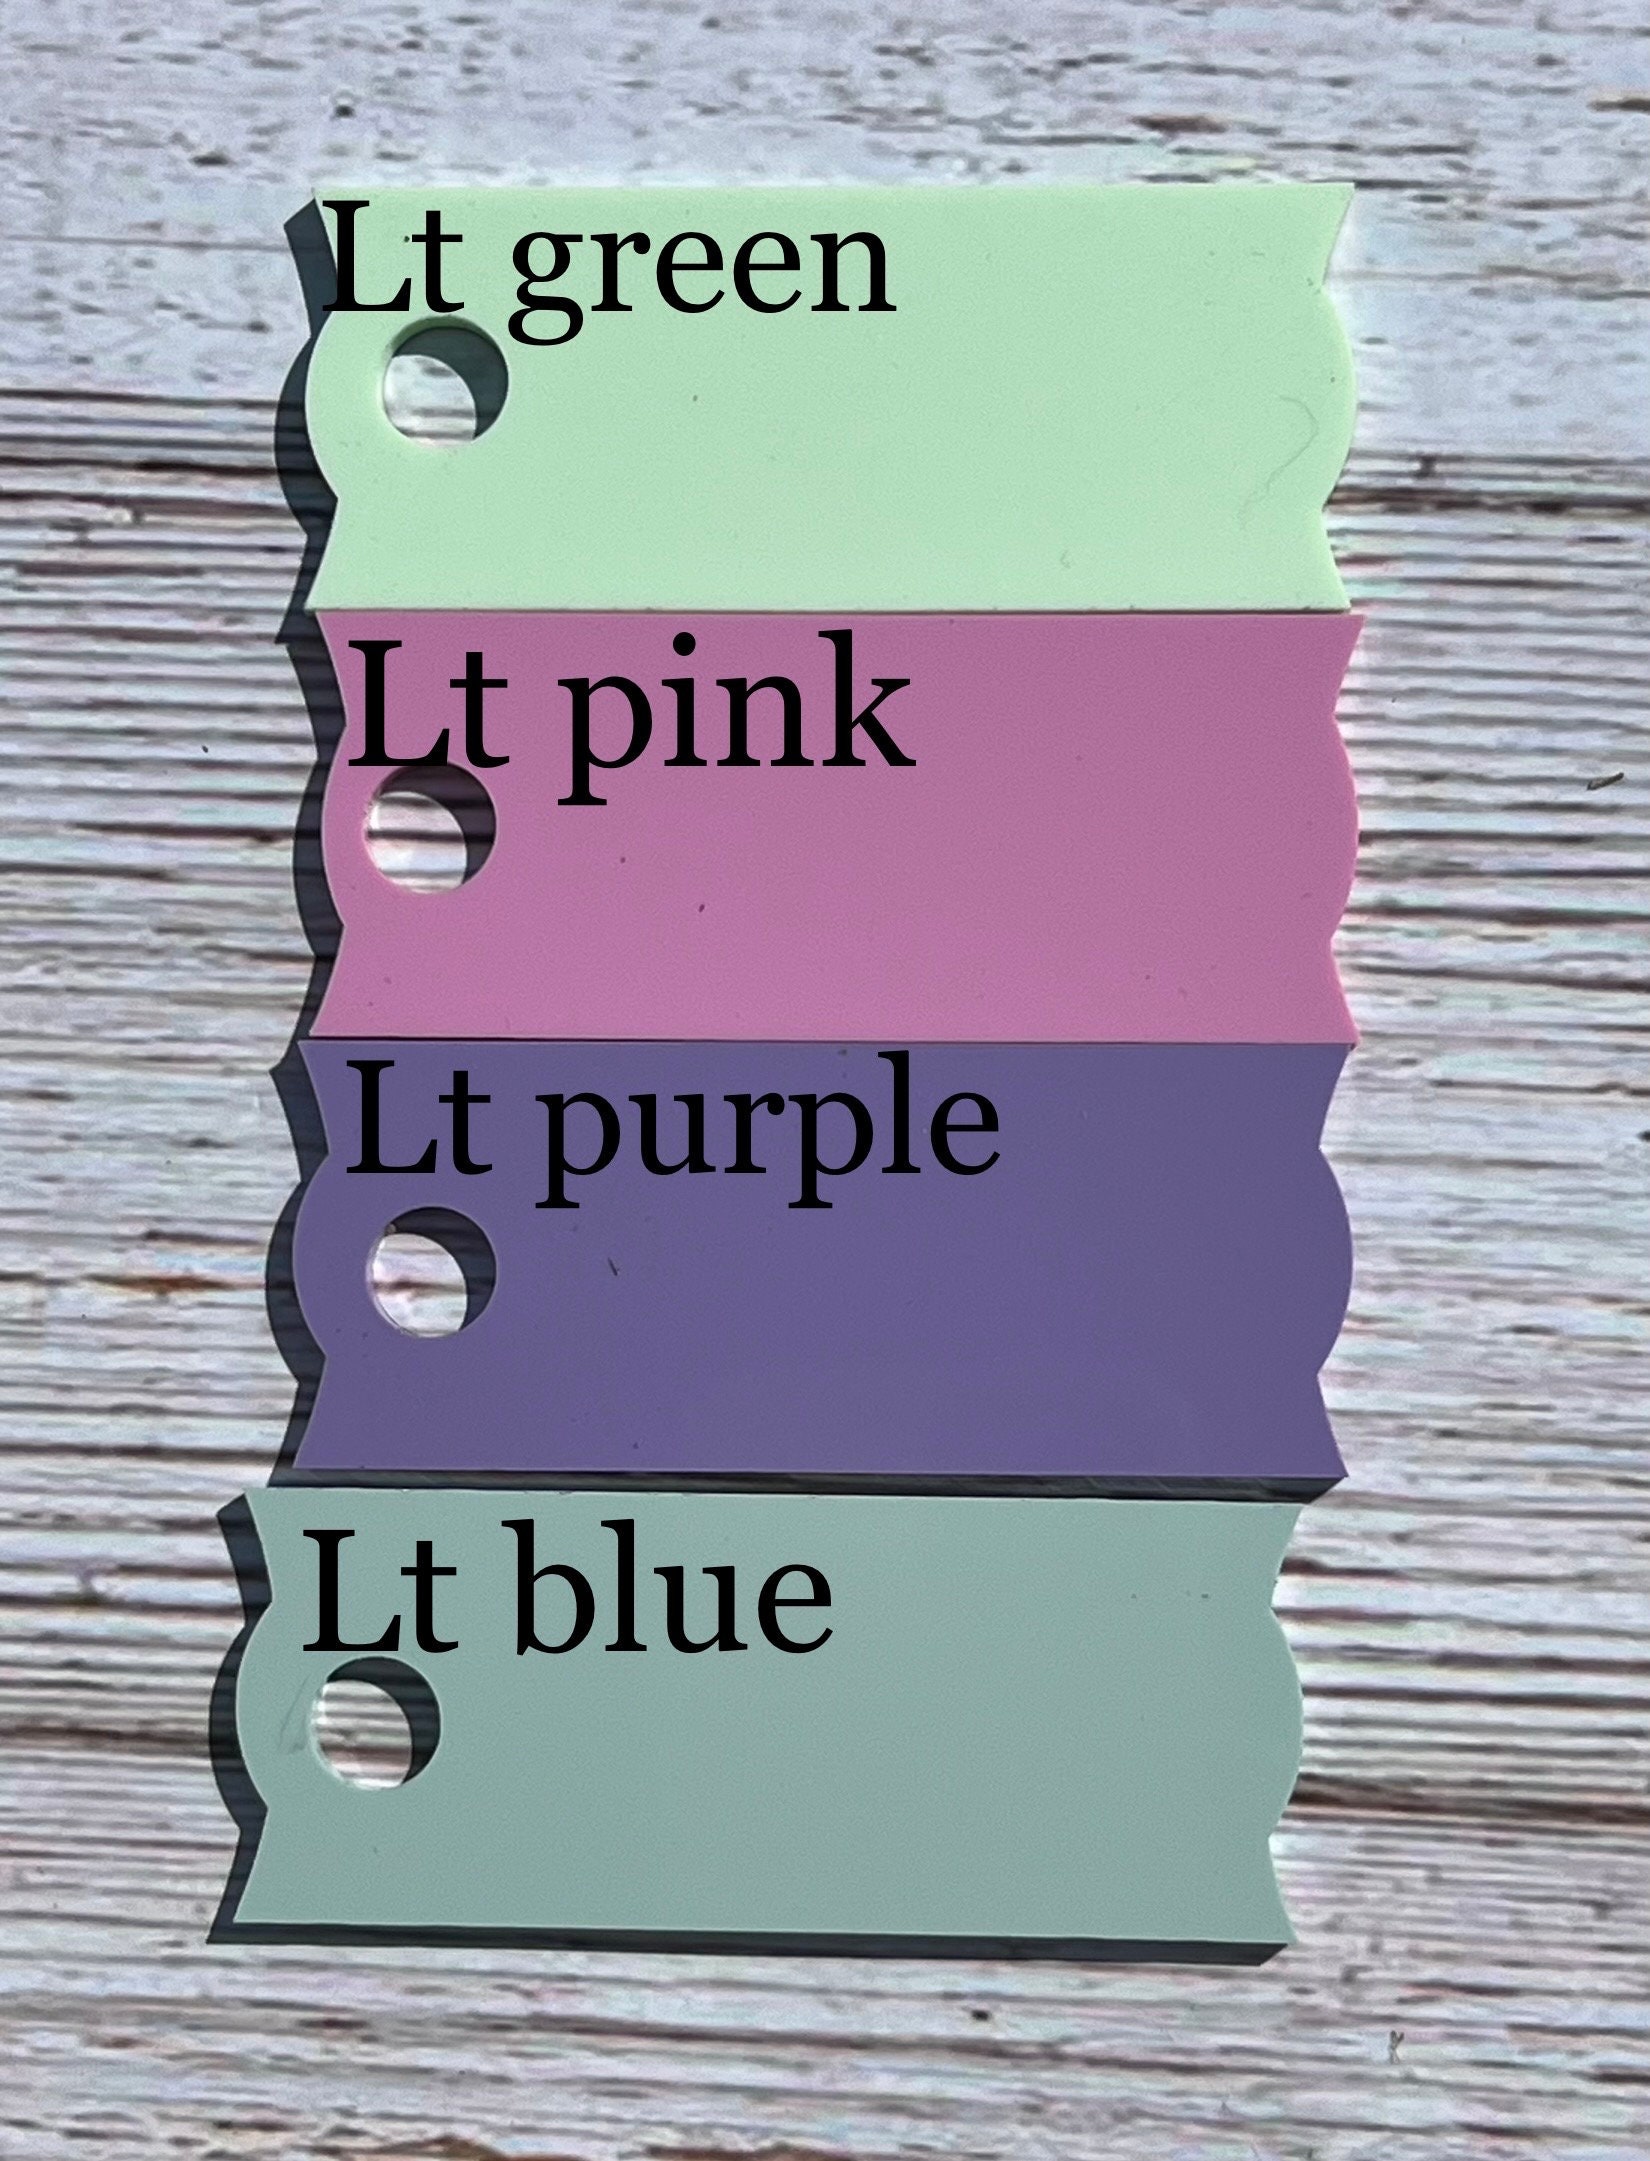 20oz & 30oz Stanley Mug Dual Color Name Plate, Multiple Colors Availab –  Limit3dPrinting